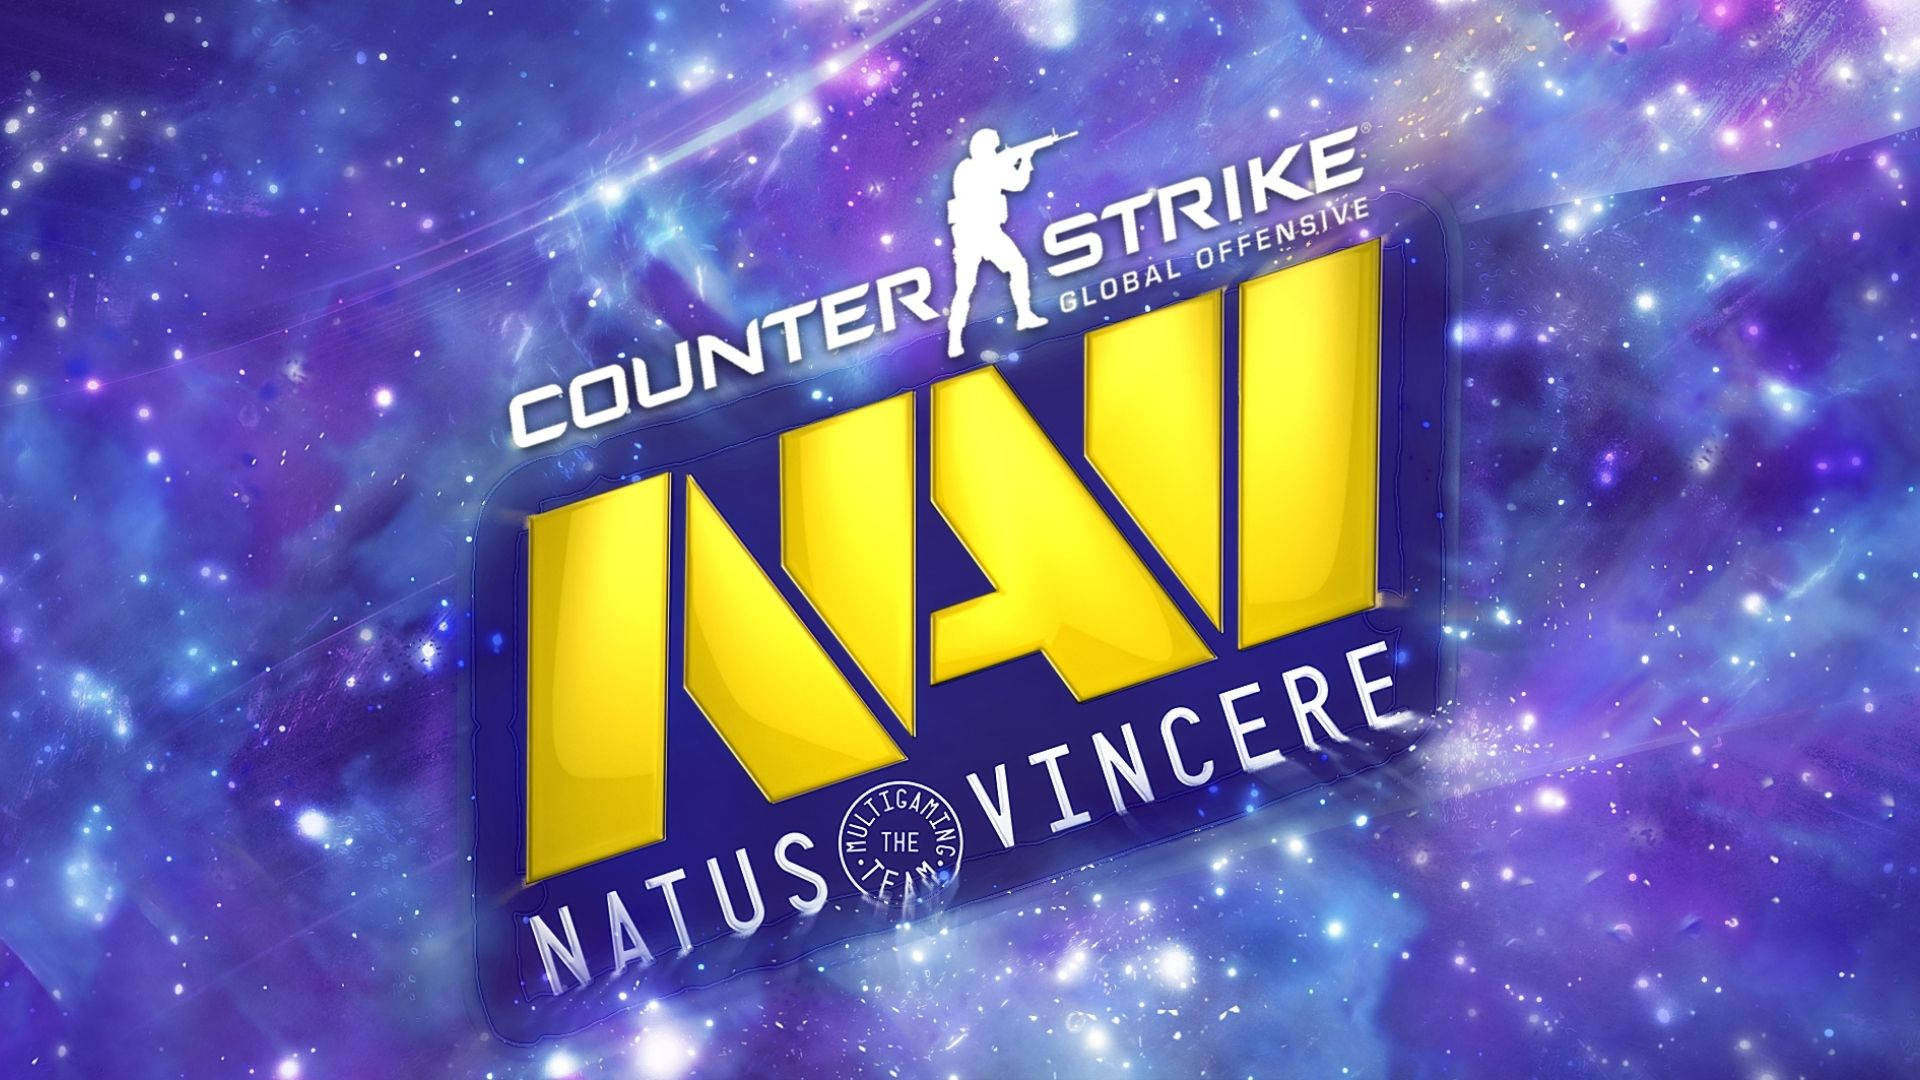 Dazzling Natus Vincere Logo